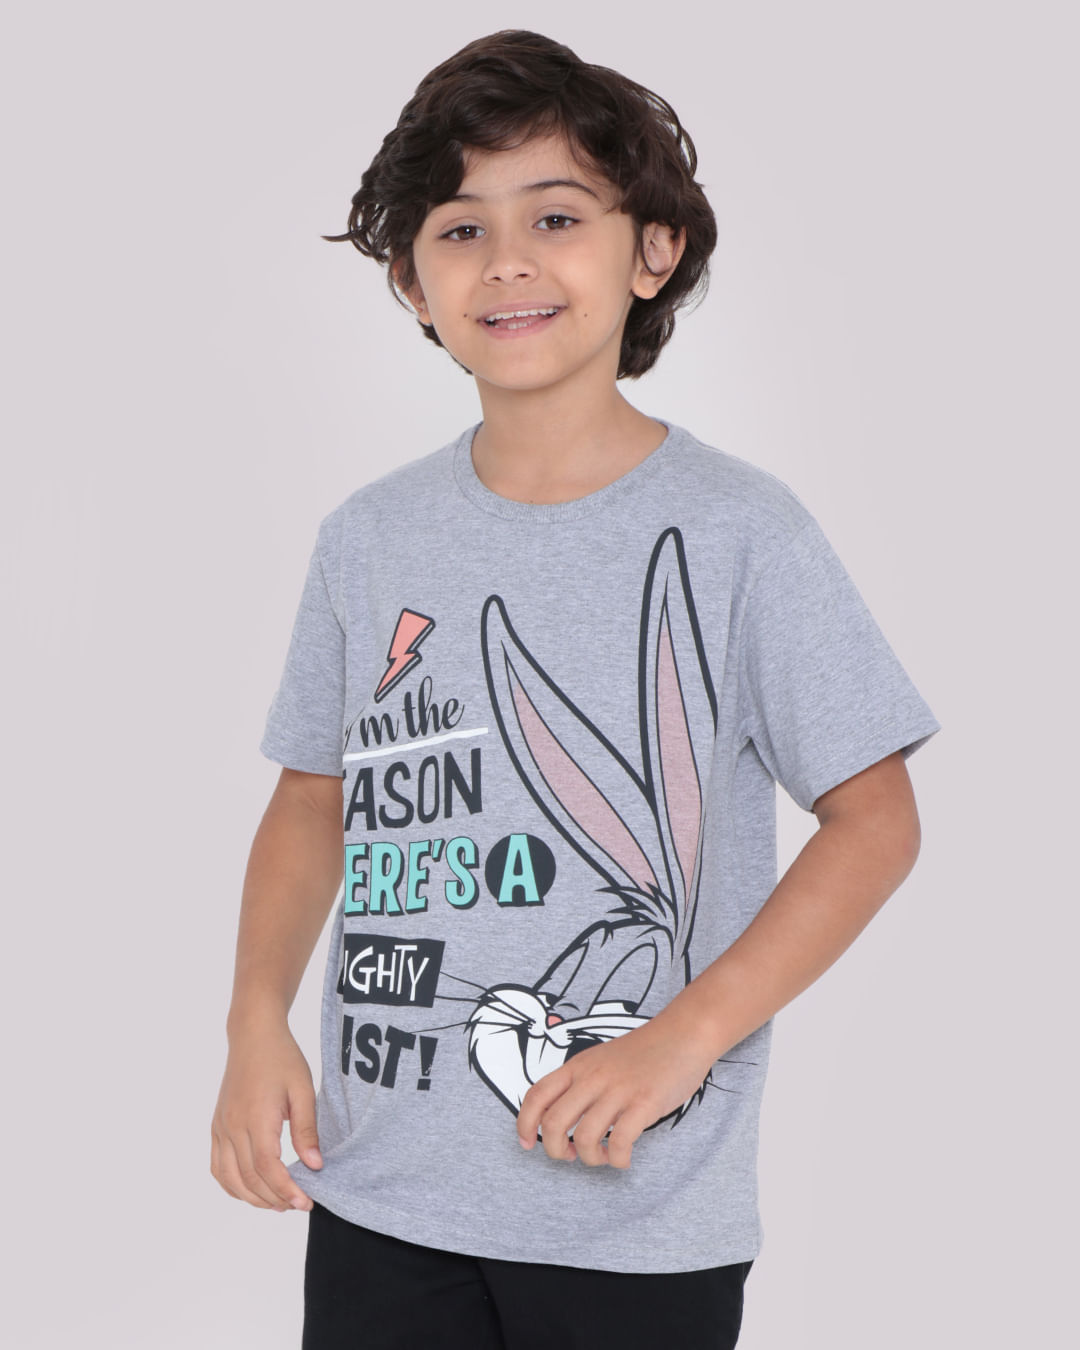 Camiseta Camisa Pernalonga Desenho Infantil Criança Menino 8_x000D_ - JK  MARCAS - Camiseta Infantil - Magazine Luiza